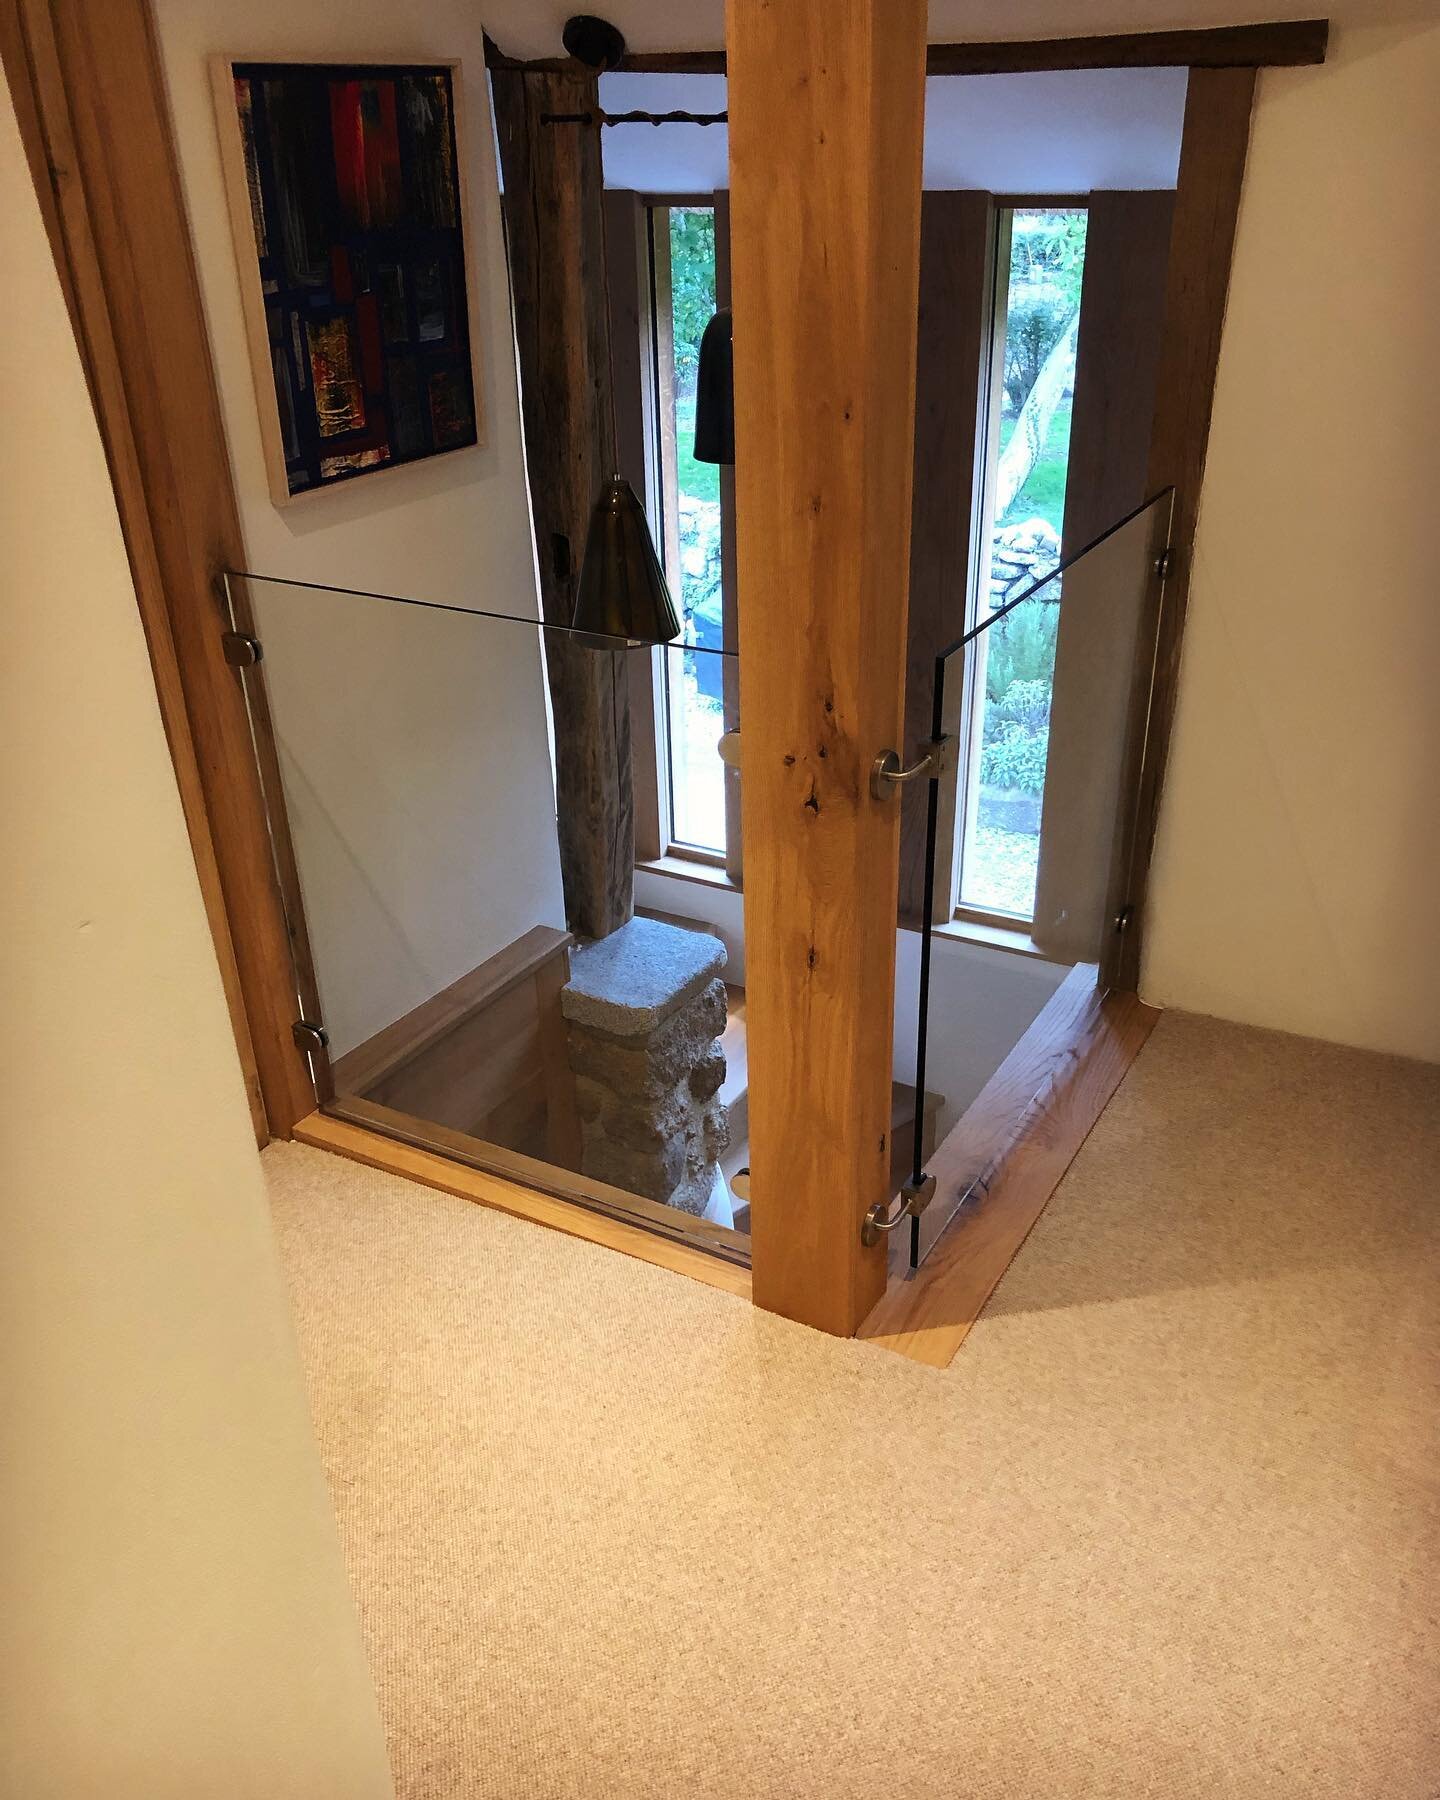 Glass banister installed along with some solid oak doors 👌🏼#oak #carpentry #carpenter #builder #renovation #conversion #cottage #sandrcarpentry #doors #stairs #glass #glassbanister